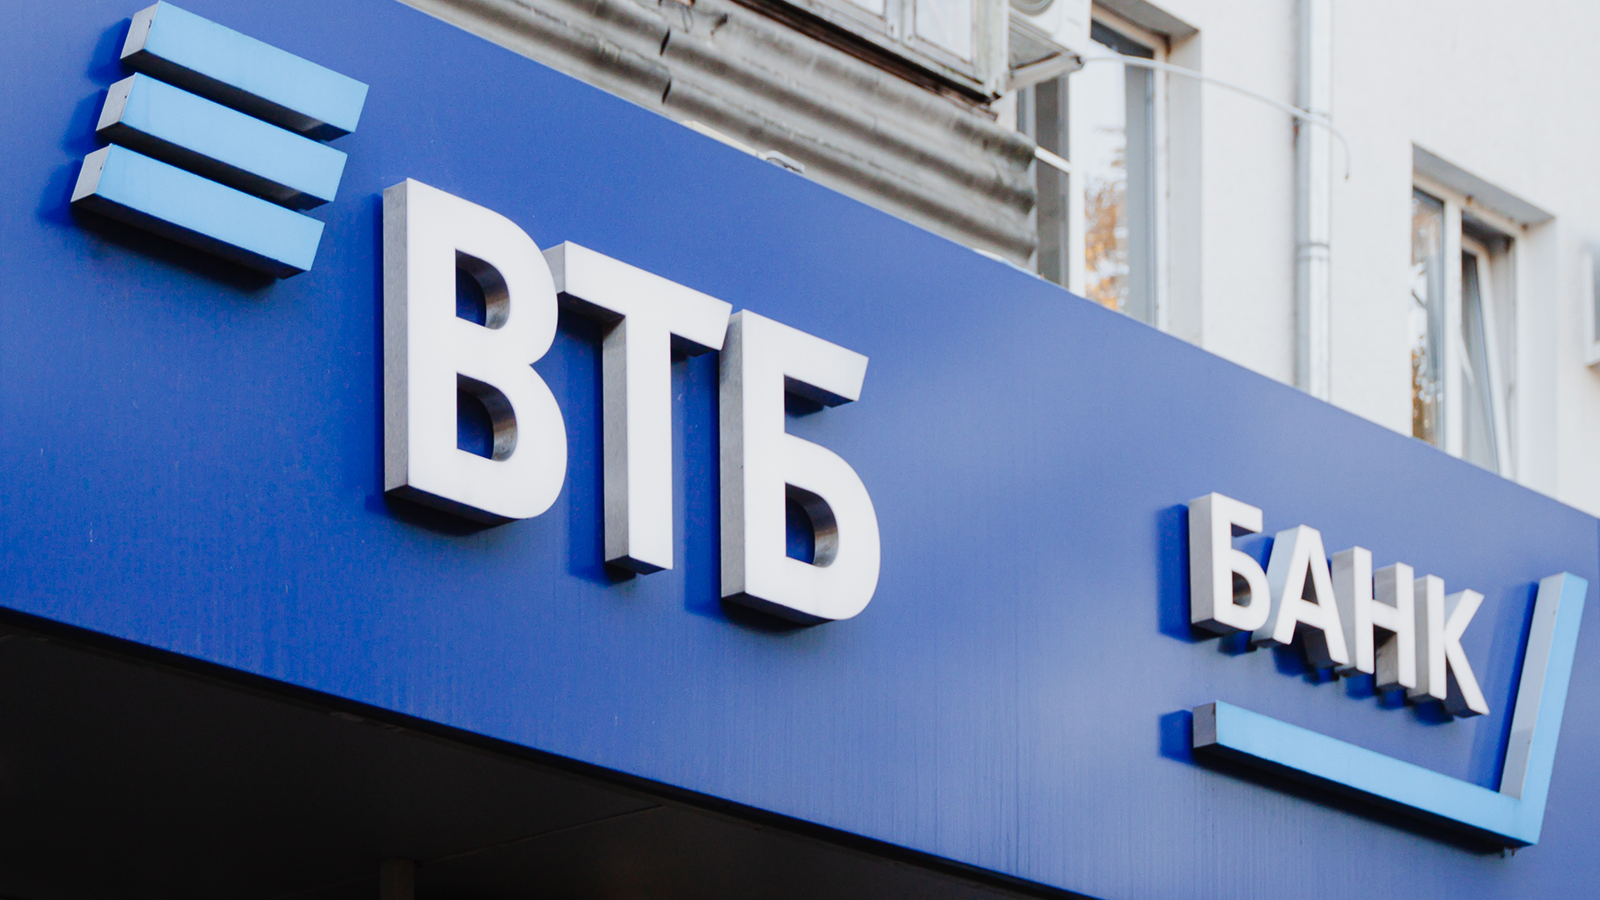 Vtb bank pjsc shanghai. ВТБ логотип. Убыток ВТБ. ВТБ фон для фото. Новый логотип ВТБ на фасаде.